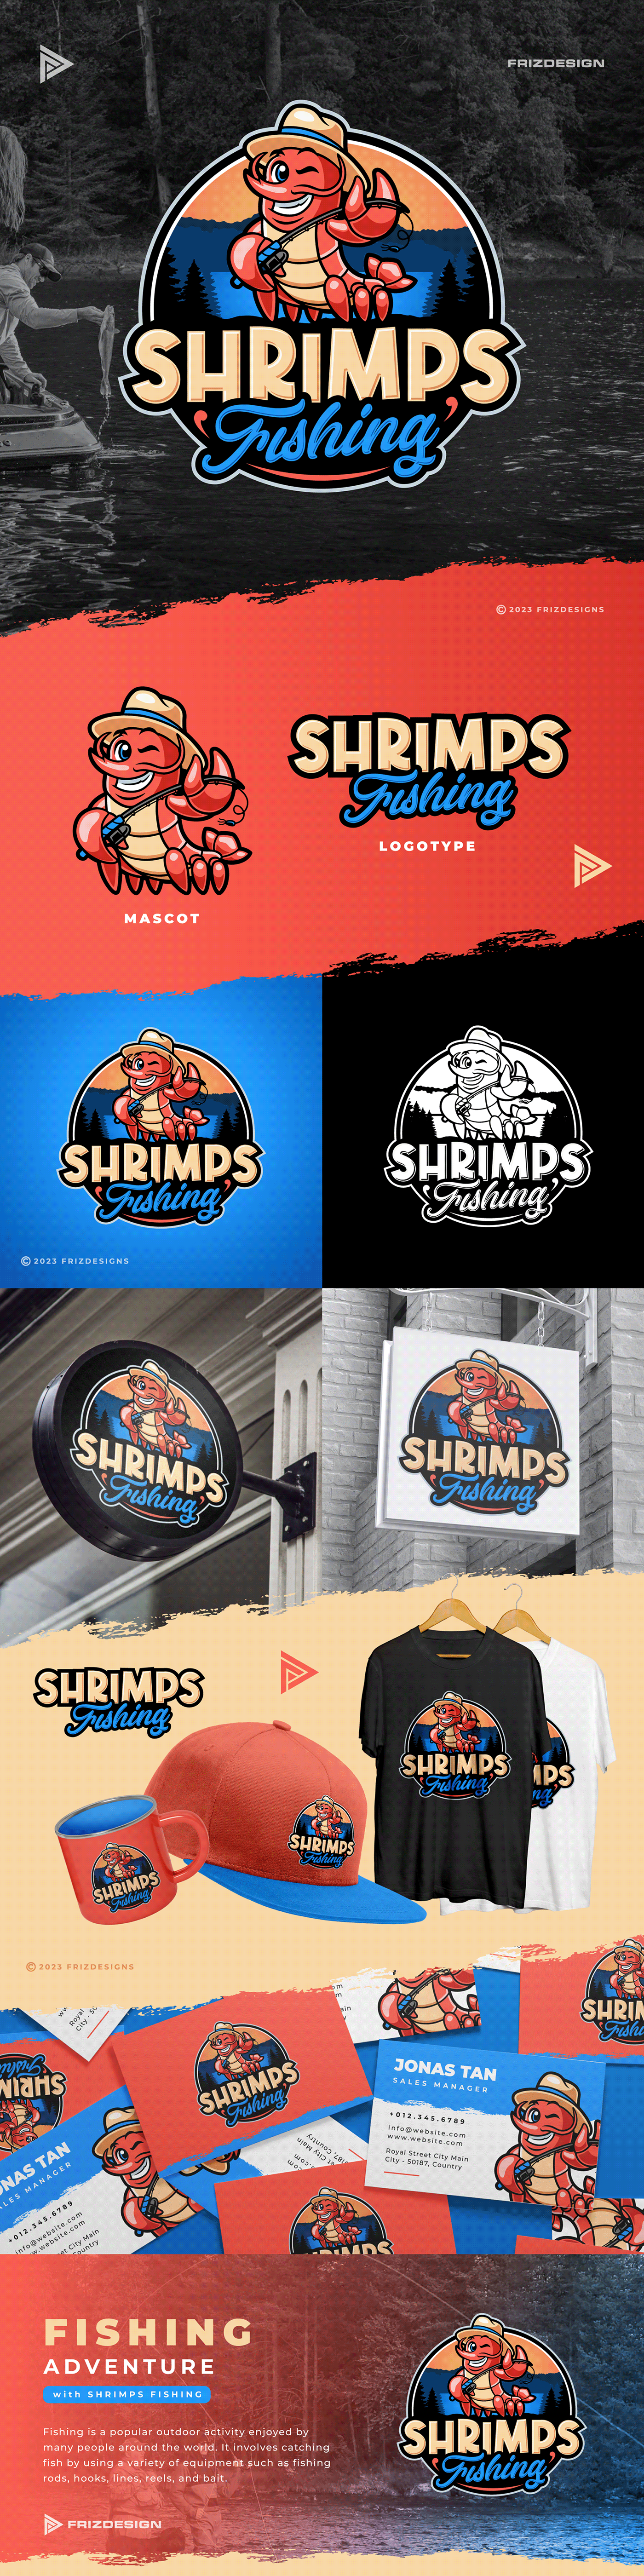 shrimp fishing adventure Retail Mascot cartoon logo